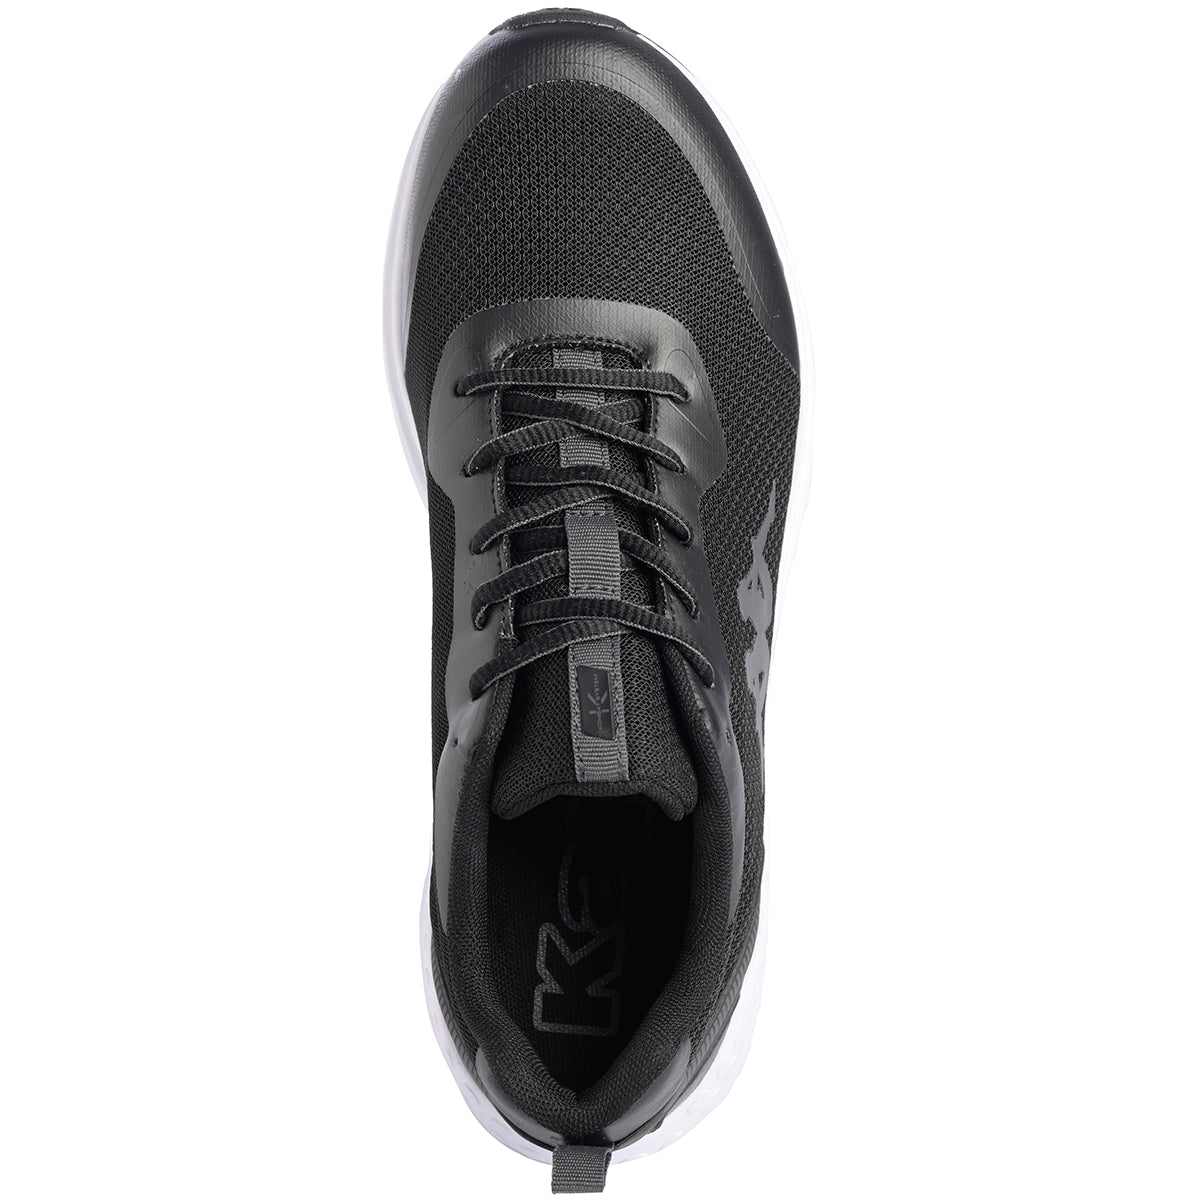 Chaussures training Glinch 2 noir unisexe - Image 4